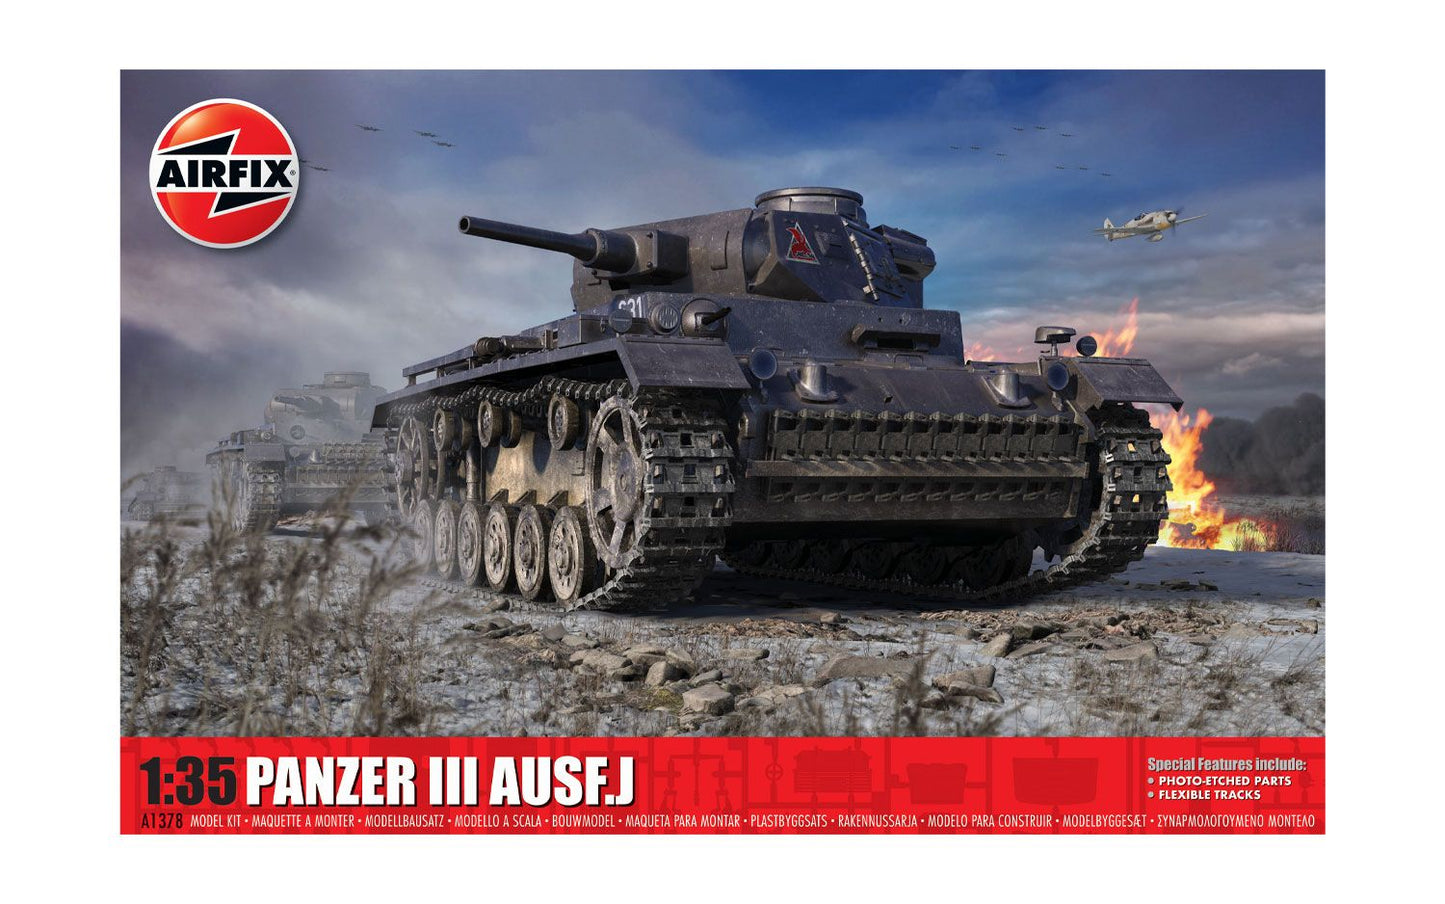 Airfix 1/35th scale Panzer III Ausf J